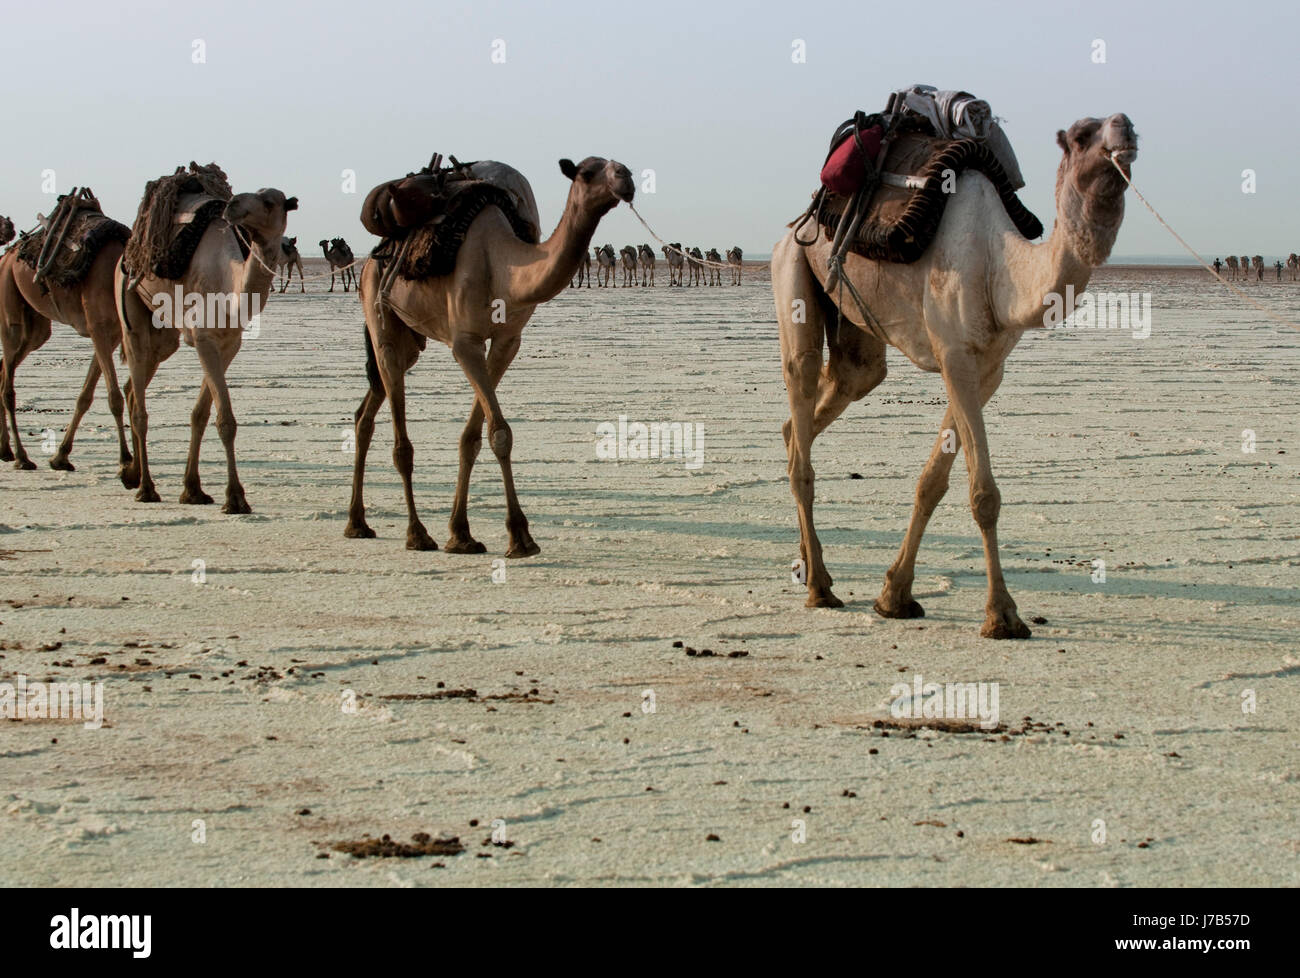 Deserto di sale wasteland camel trasporto sale caravan vasto deserto animale Foto Stock